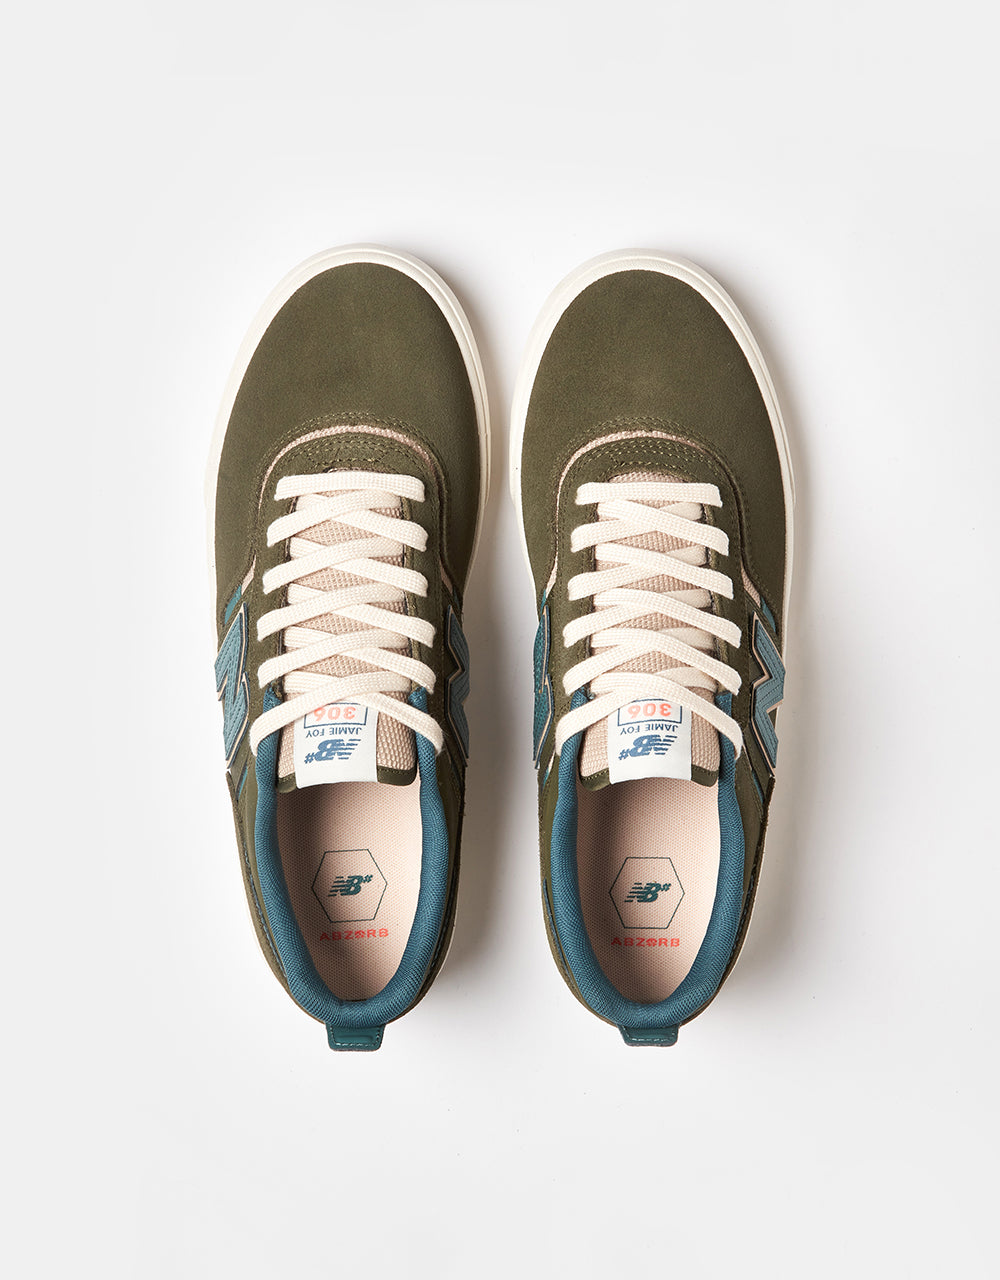 New Balance Numeric Jamie Foy 306 Skate Shoes - Dark Olive/Spruce